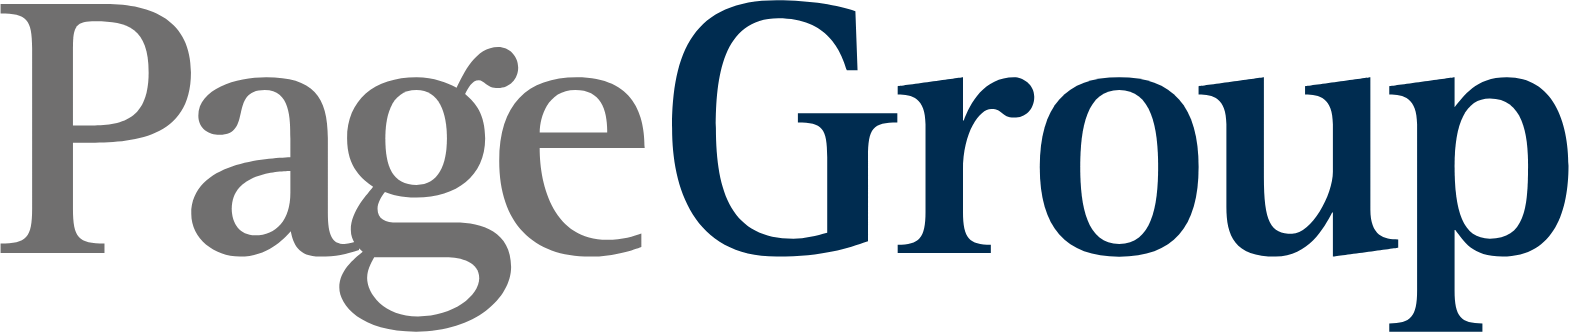 PageGroup logo large (transparent PNG)